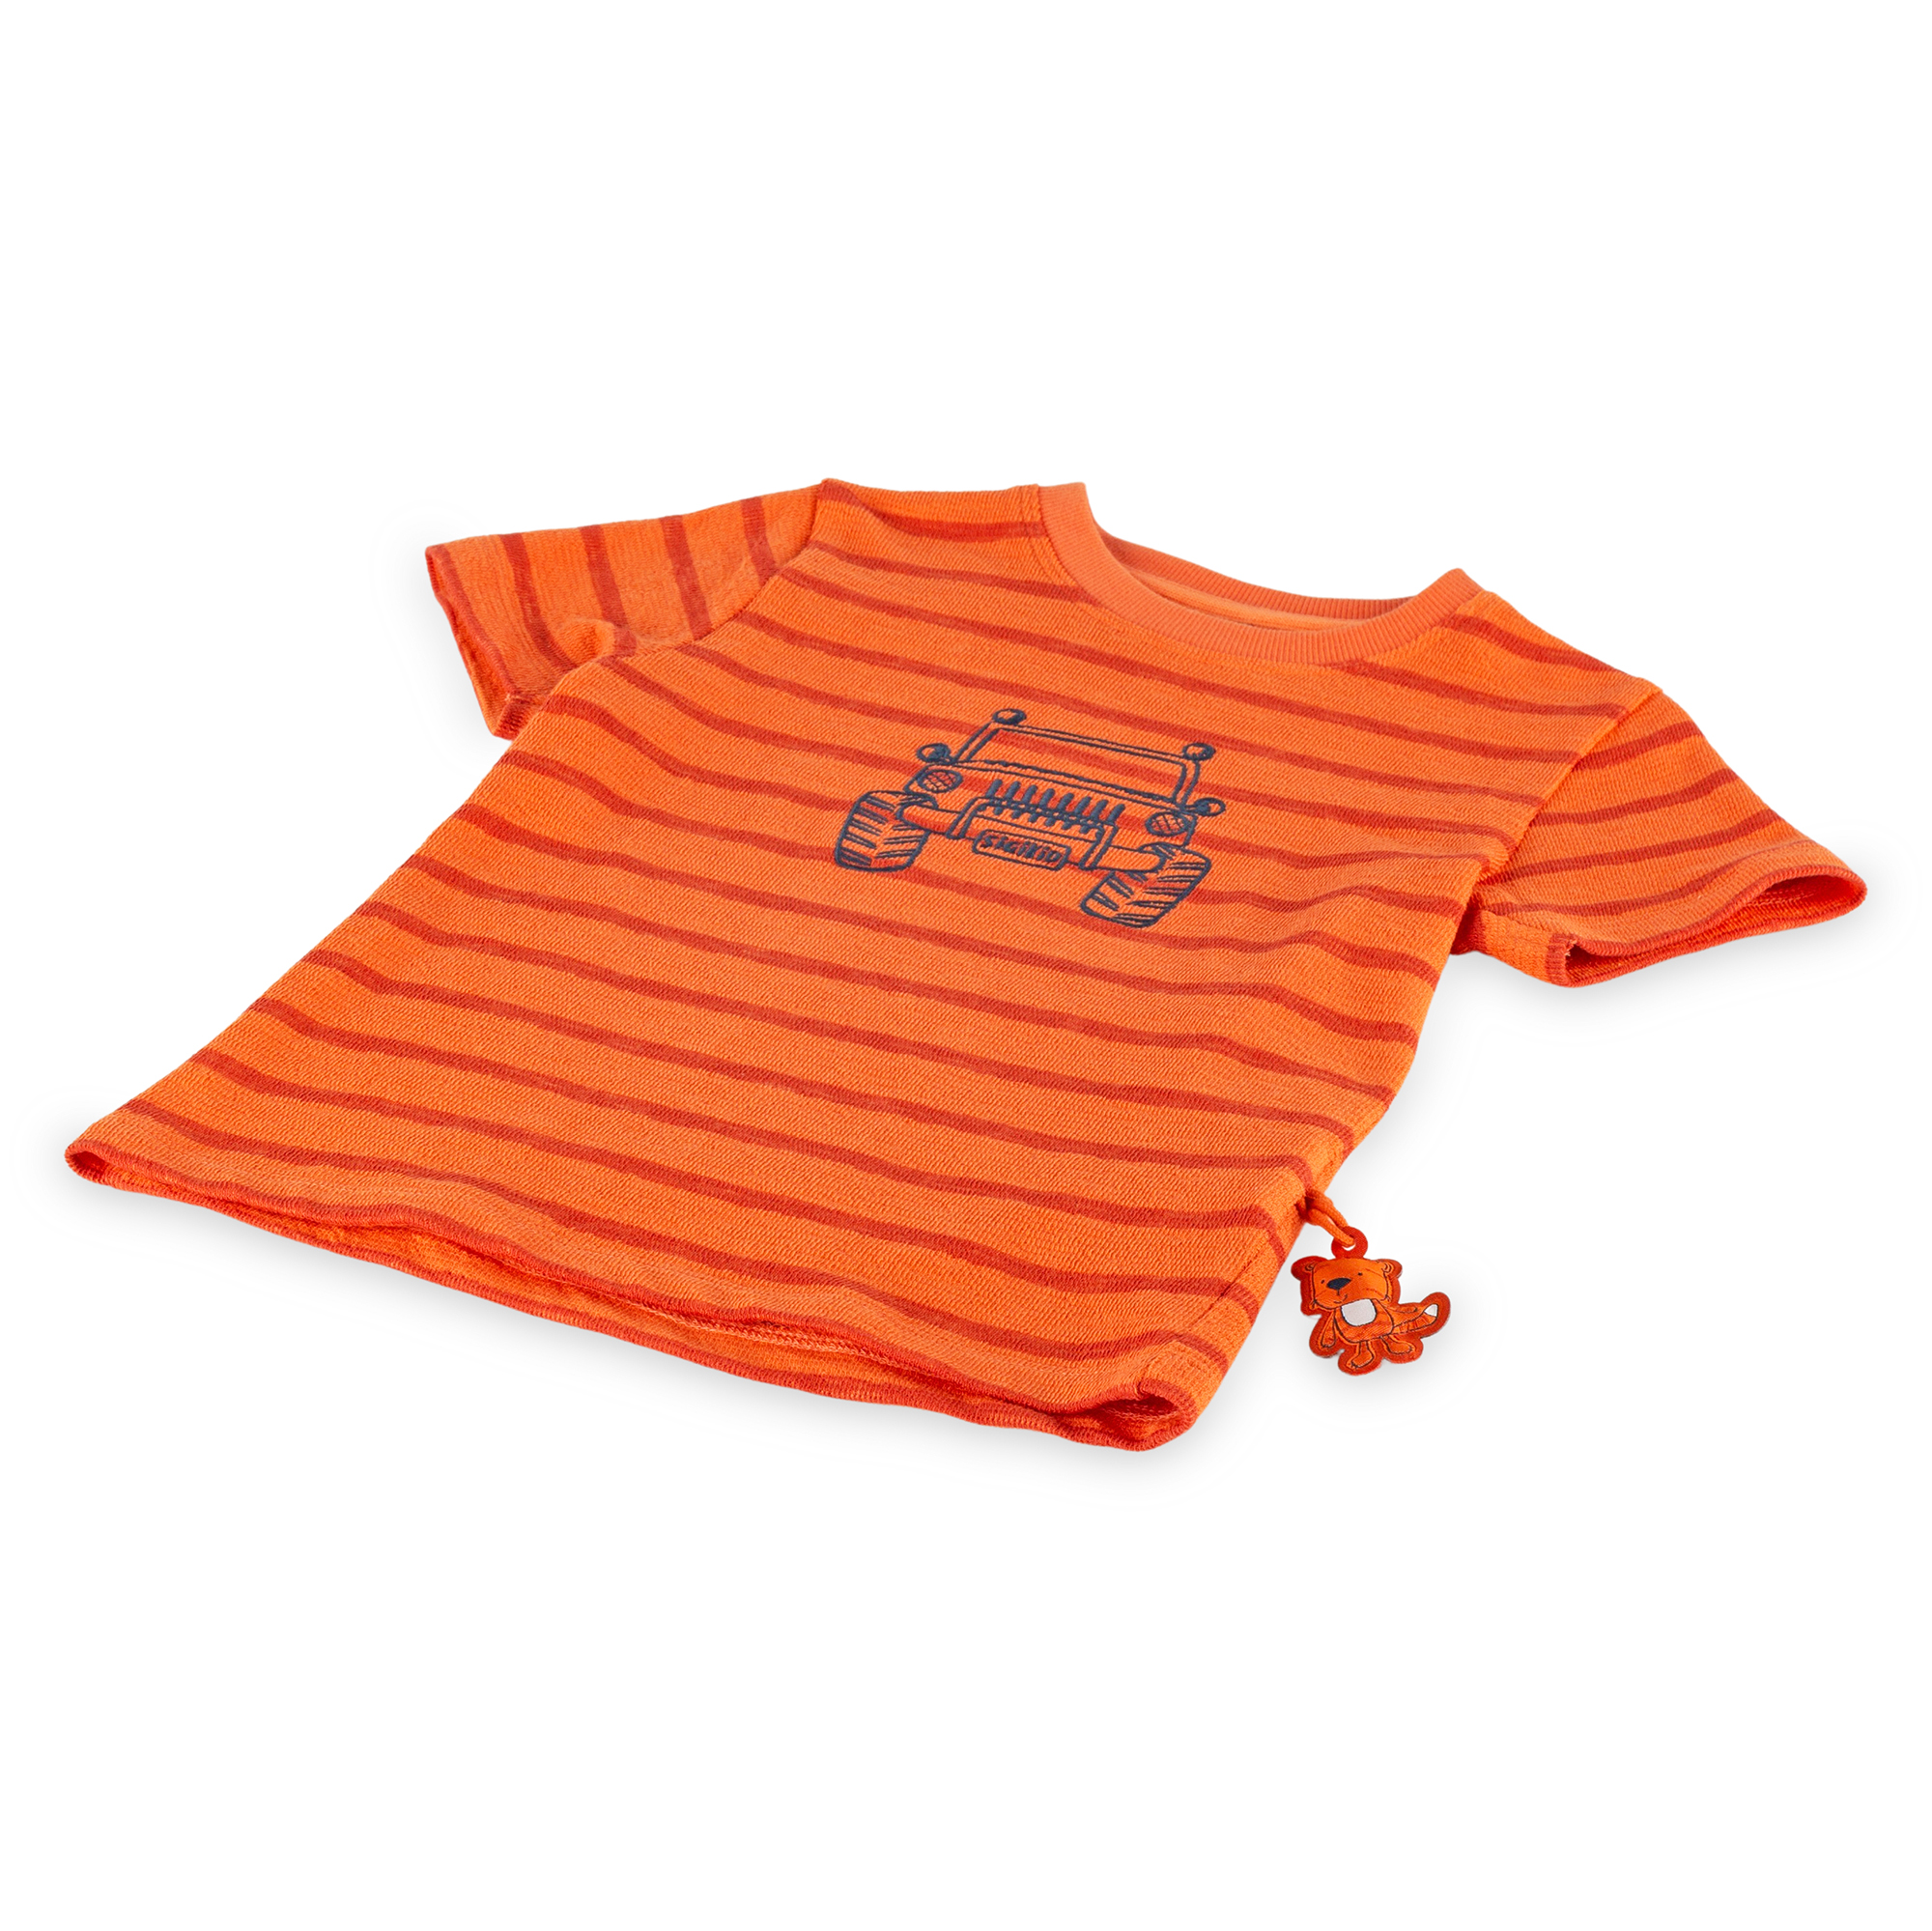 Kinder Ringel T-Shirt mit Jeep Motiv, orange-rot